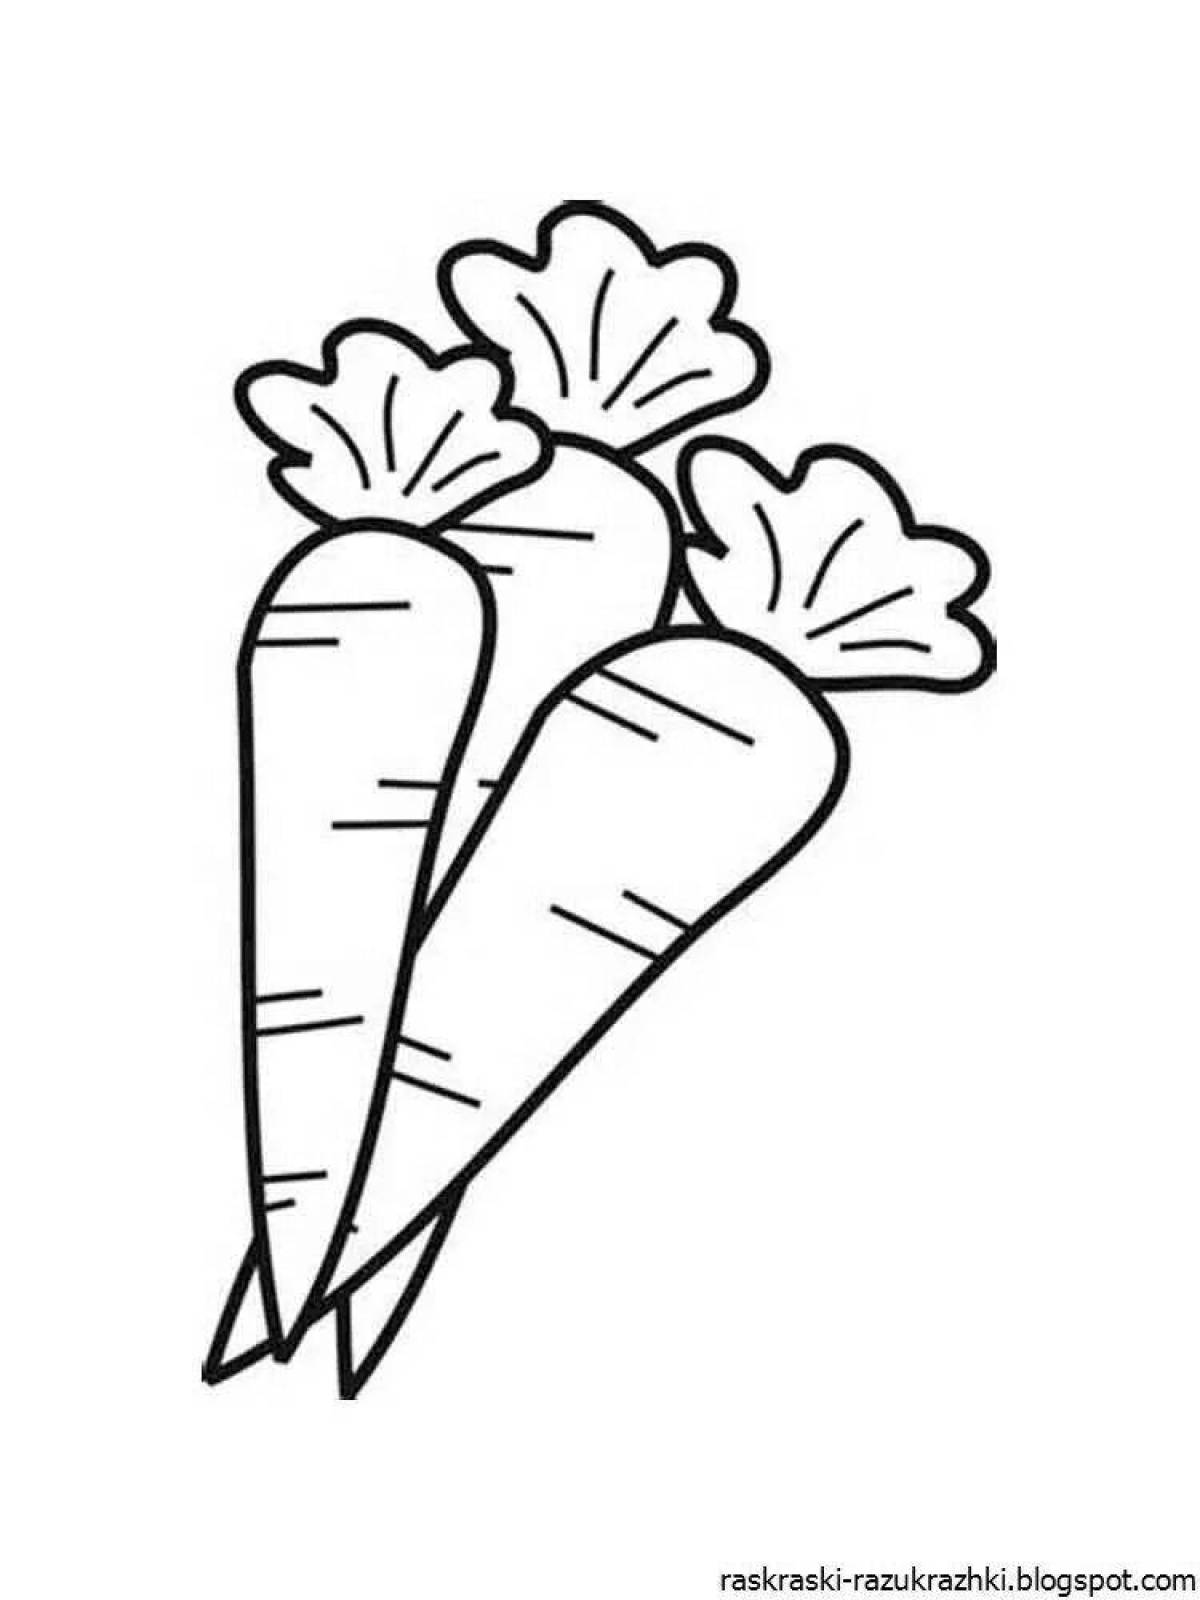 Playful carrot sketch